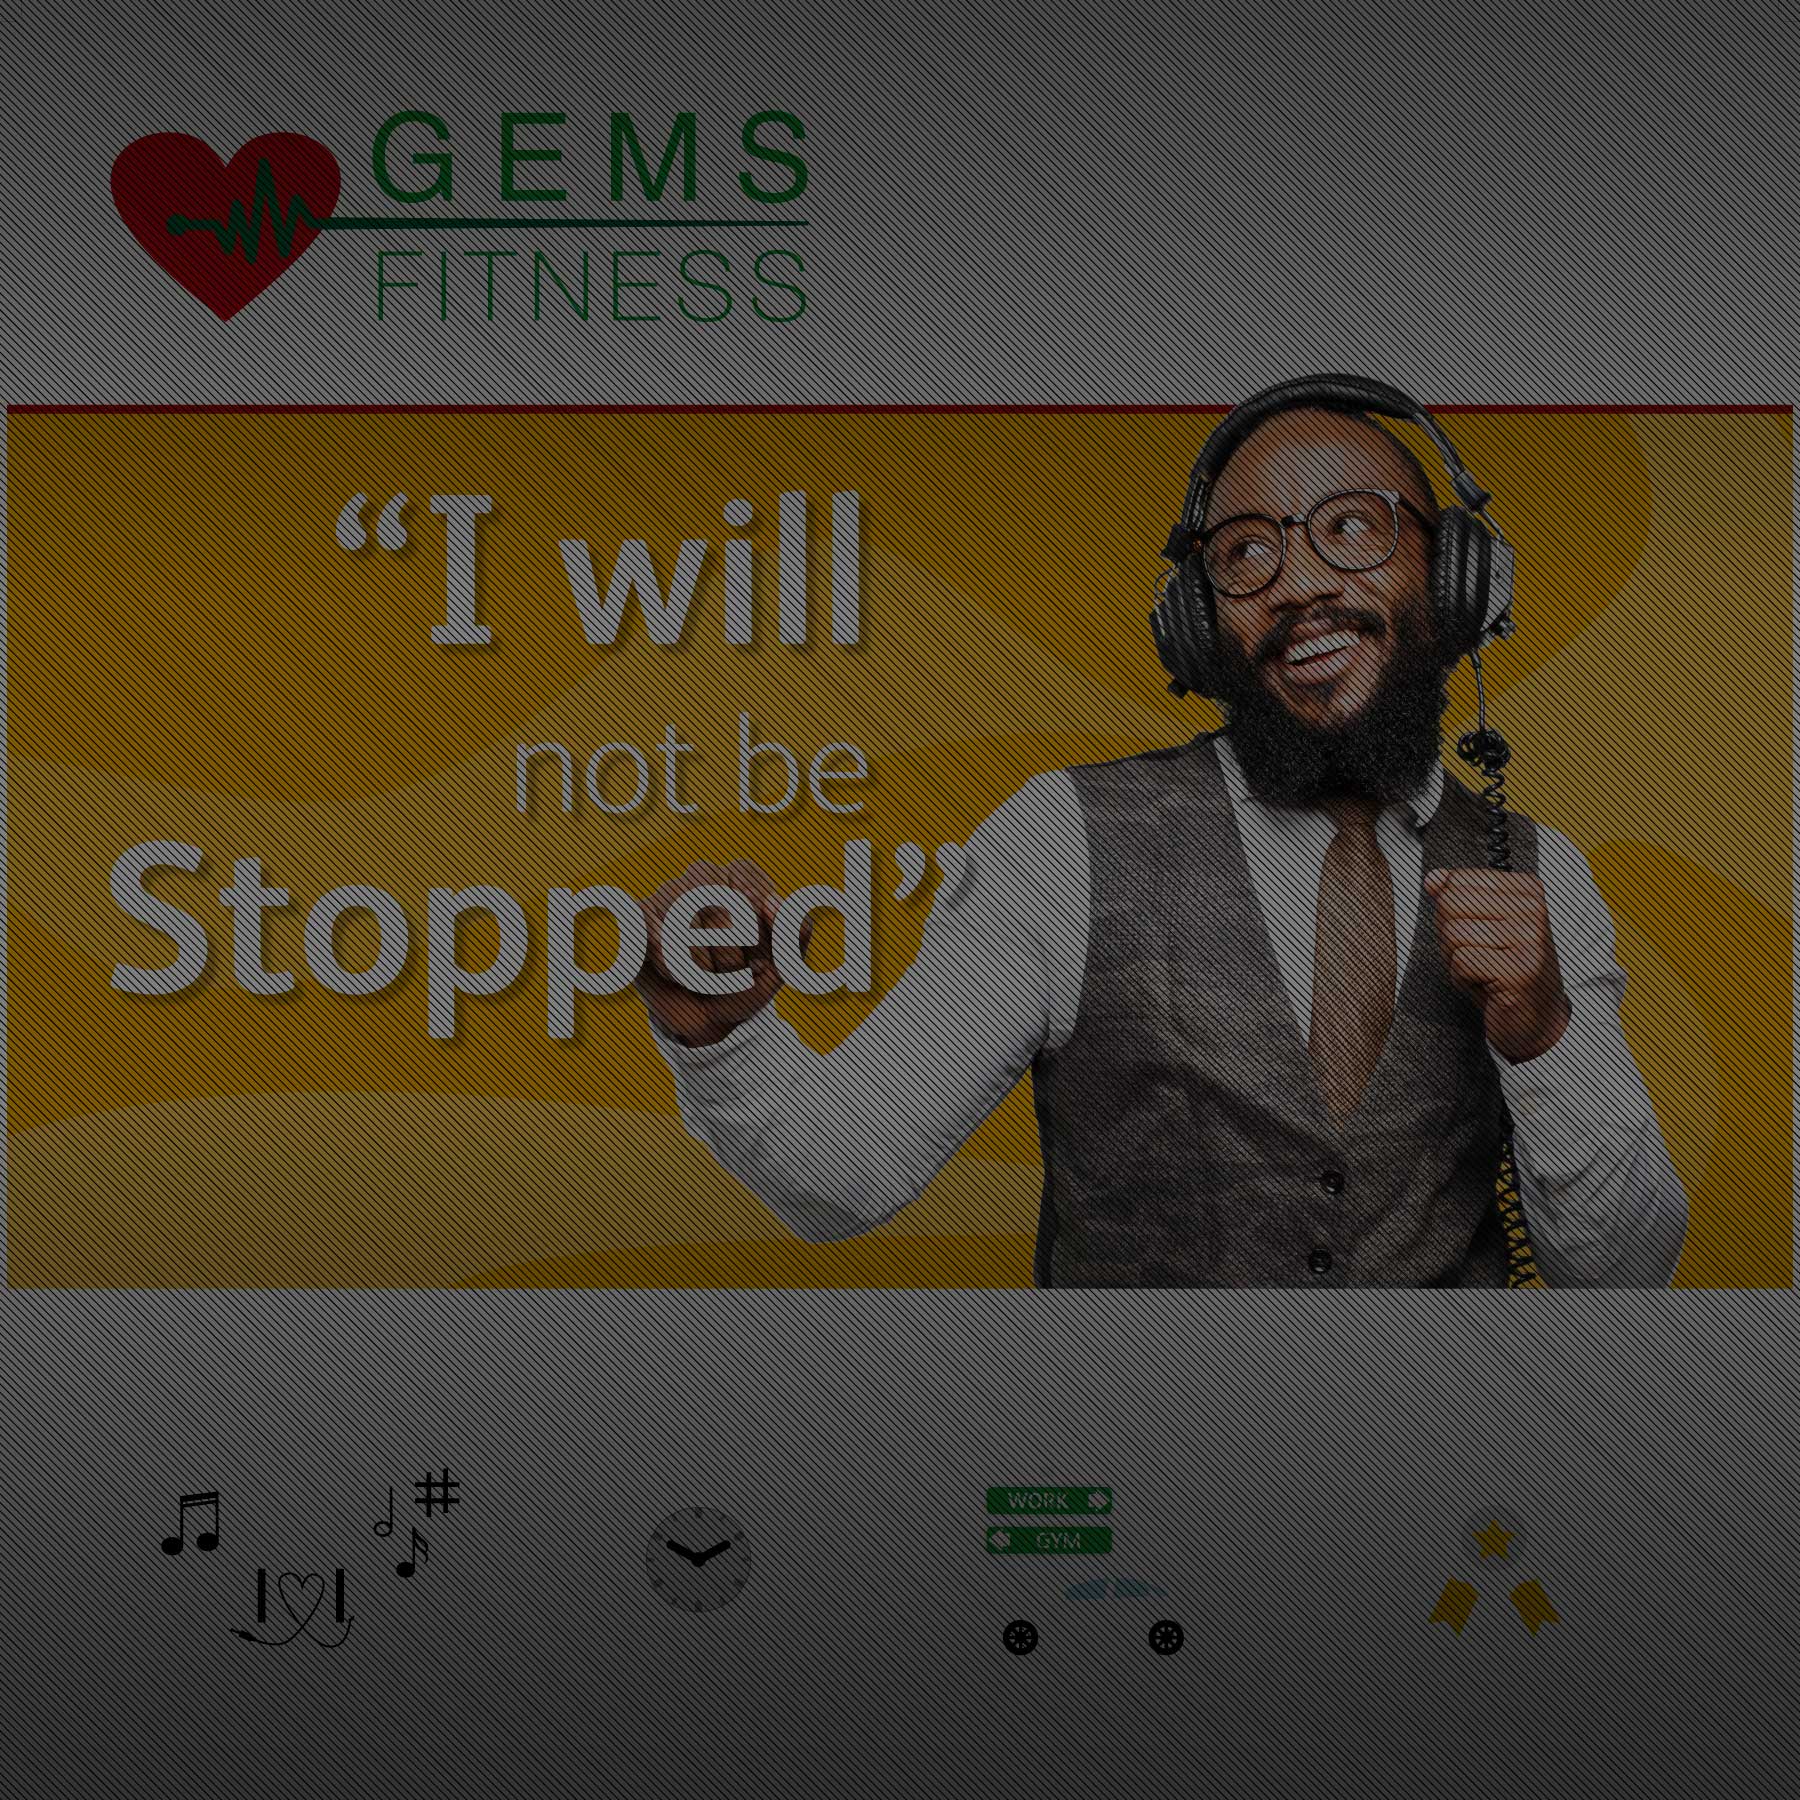 GEMS Internal Advertising Campaign